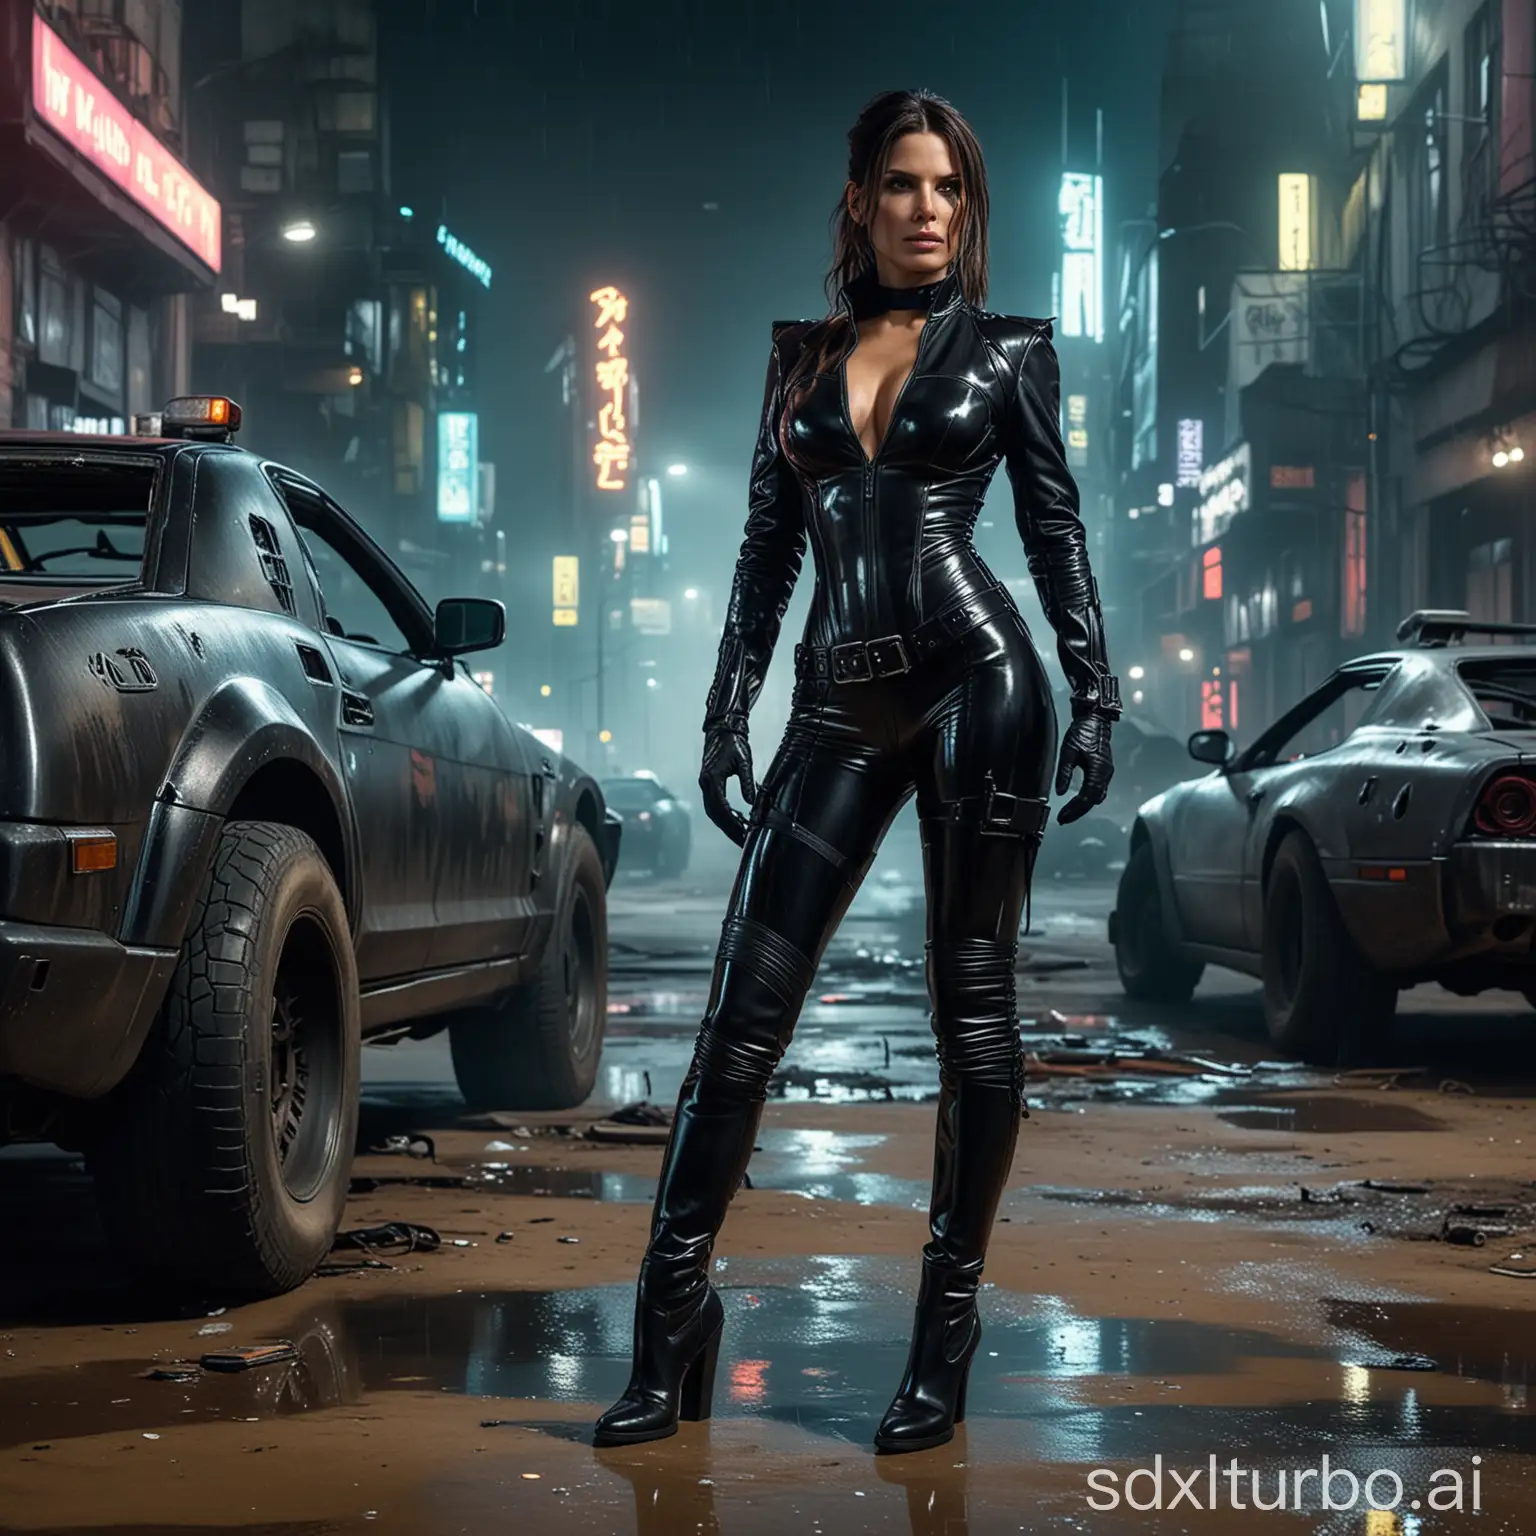 Cyberpunk-Police-Officer-Sandra-Bullock-in-Shiny-PVC-Suit-Amidst-Urban-Chaos